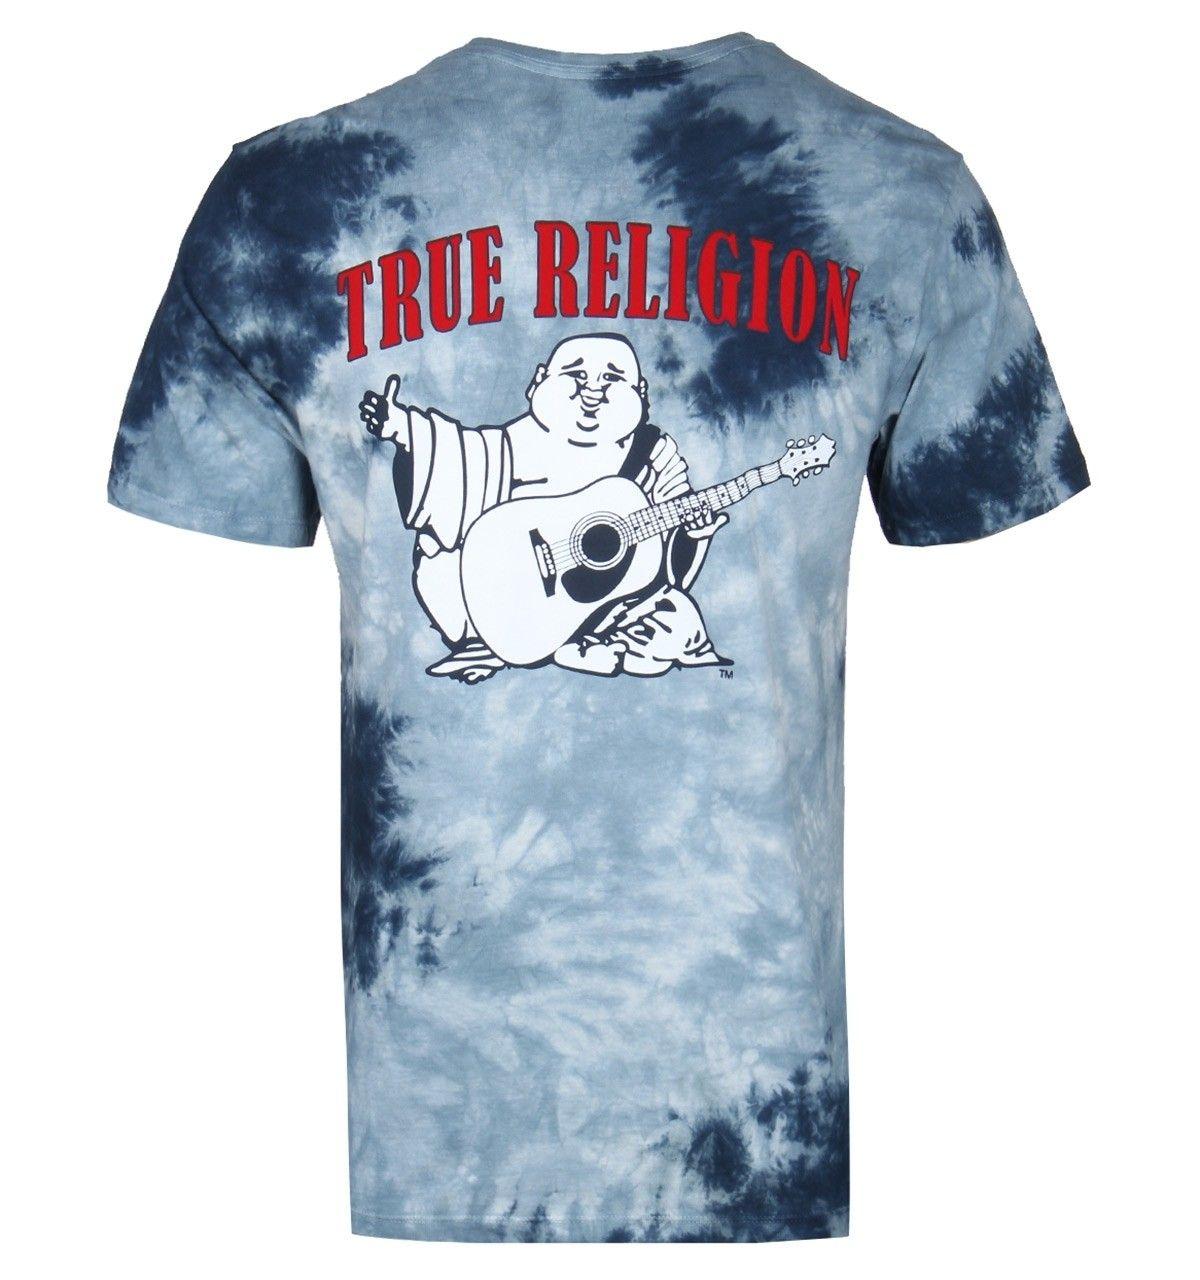 True Religion Buddha Logo - True Religion Ocean Waves Blue Tie Dye Buddha Logo Short Sleeve T-Shirt